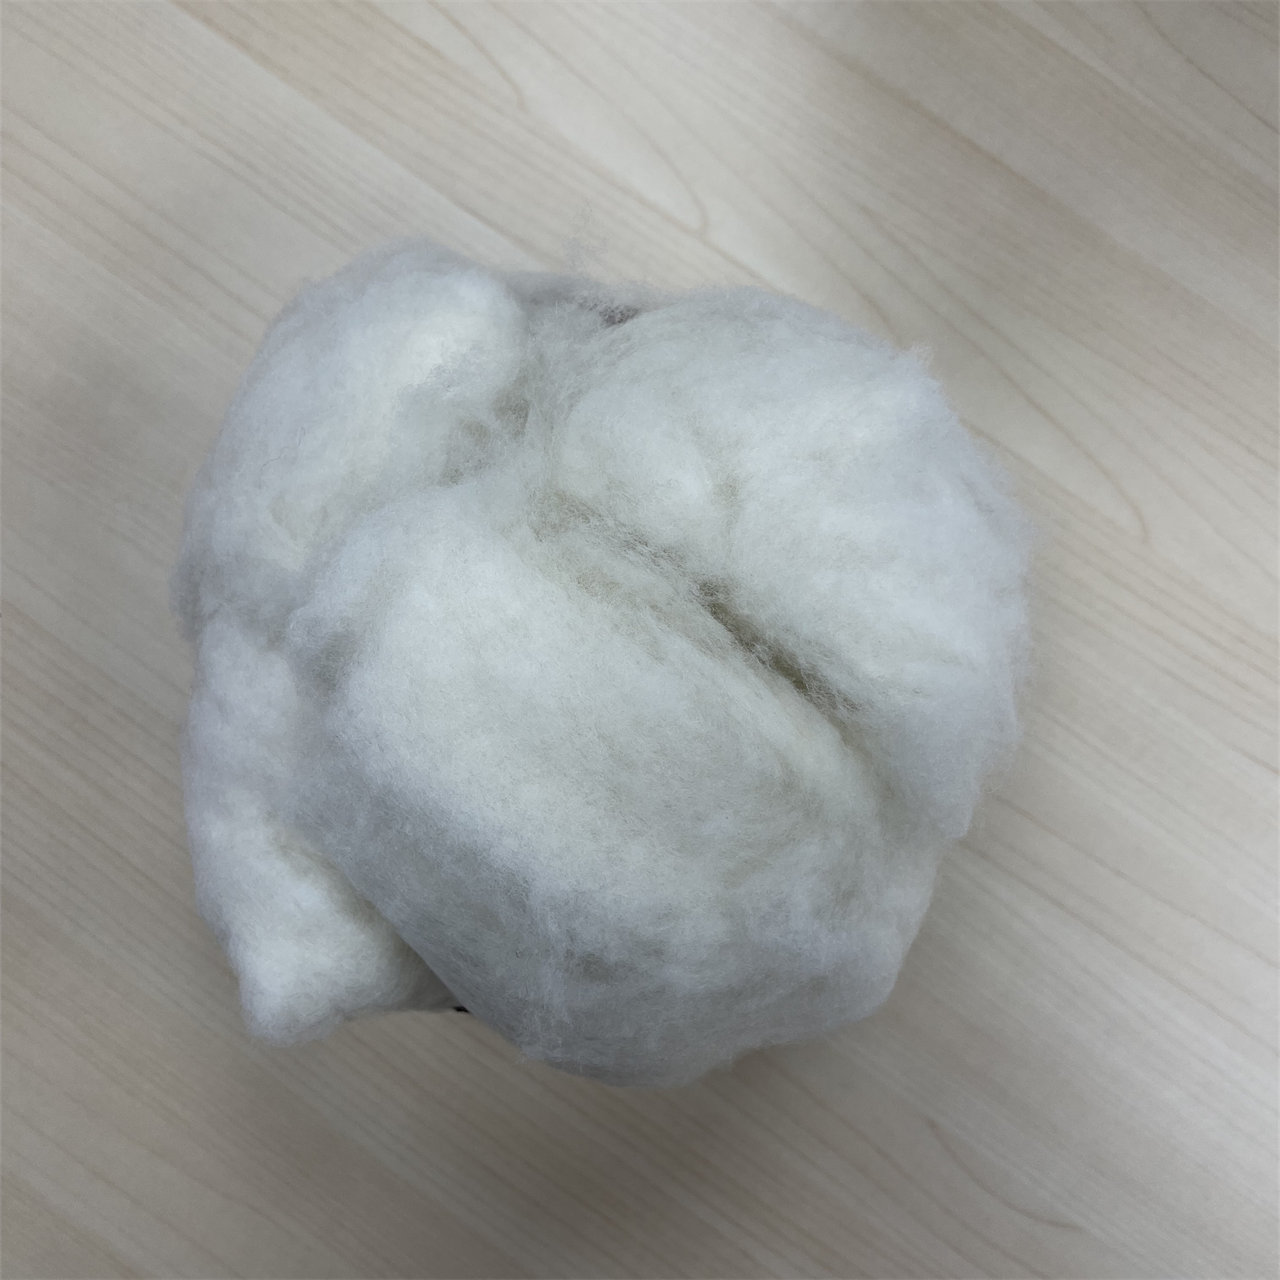 Chinese sheep wool